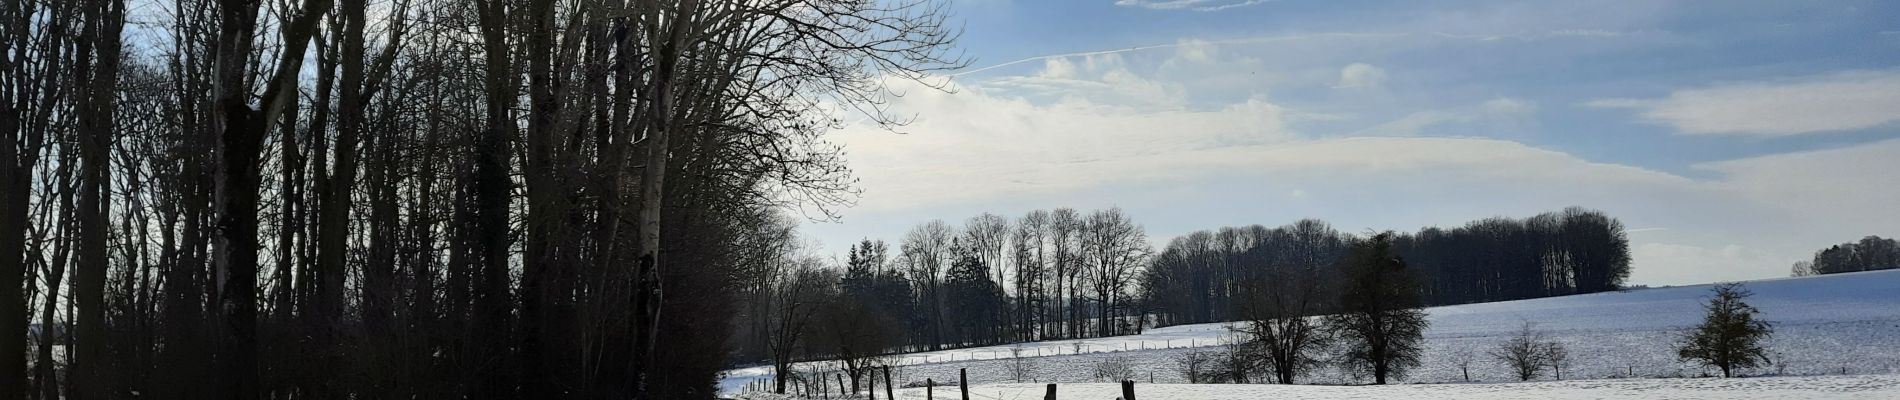 Trail Walking Tinlot - Ramelot sous la neige - Photo